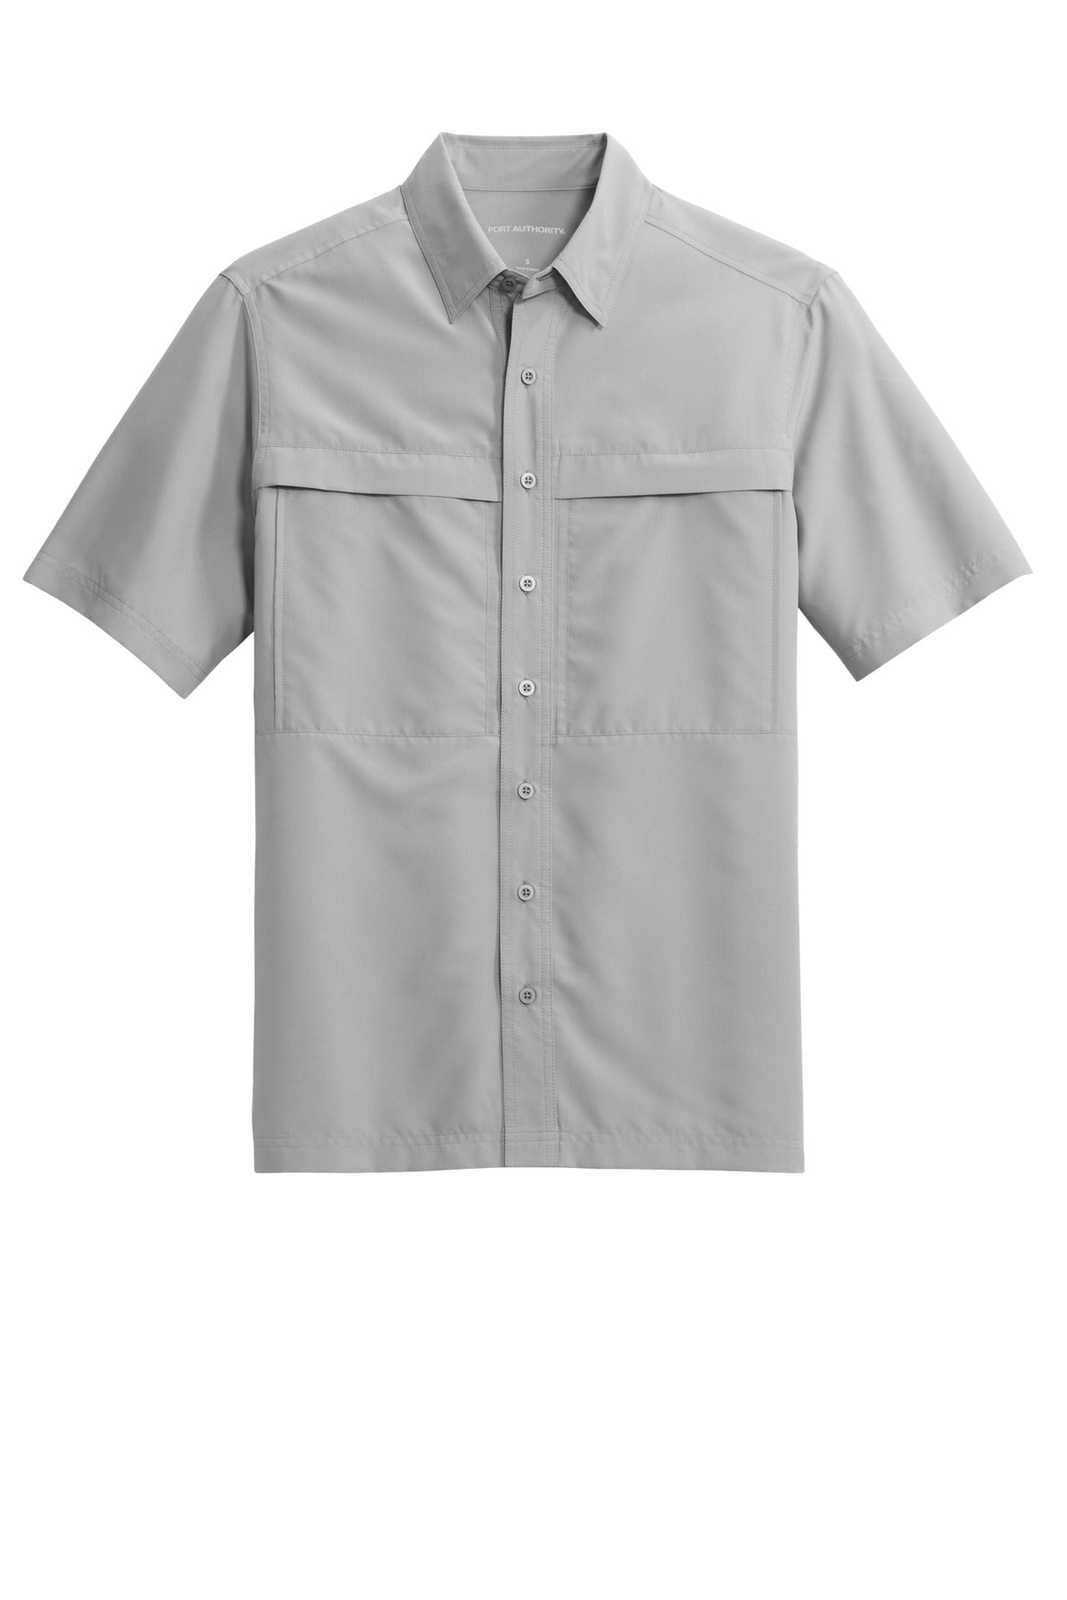 Port Authority W961 Short Sleeve UV Daybreak Shirt - Gusty Grey - HIT a Double - 1